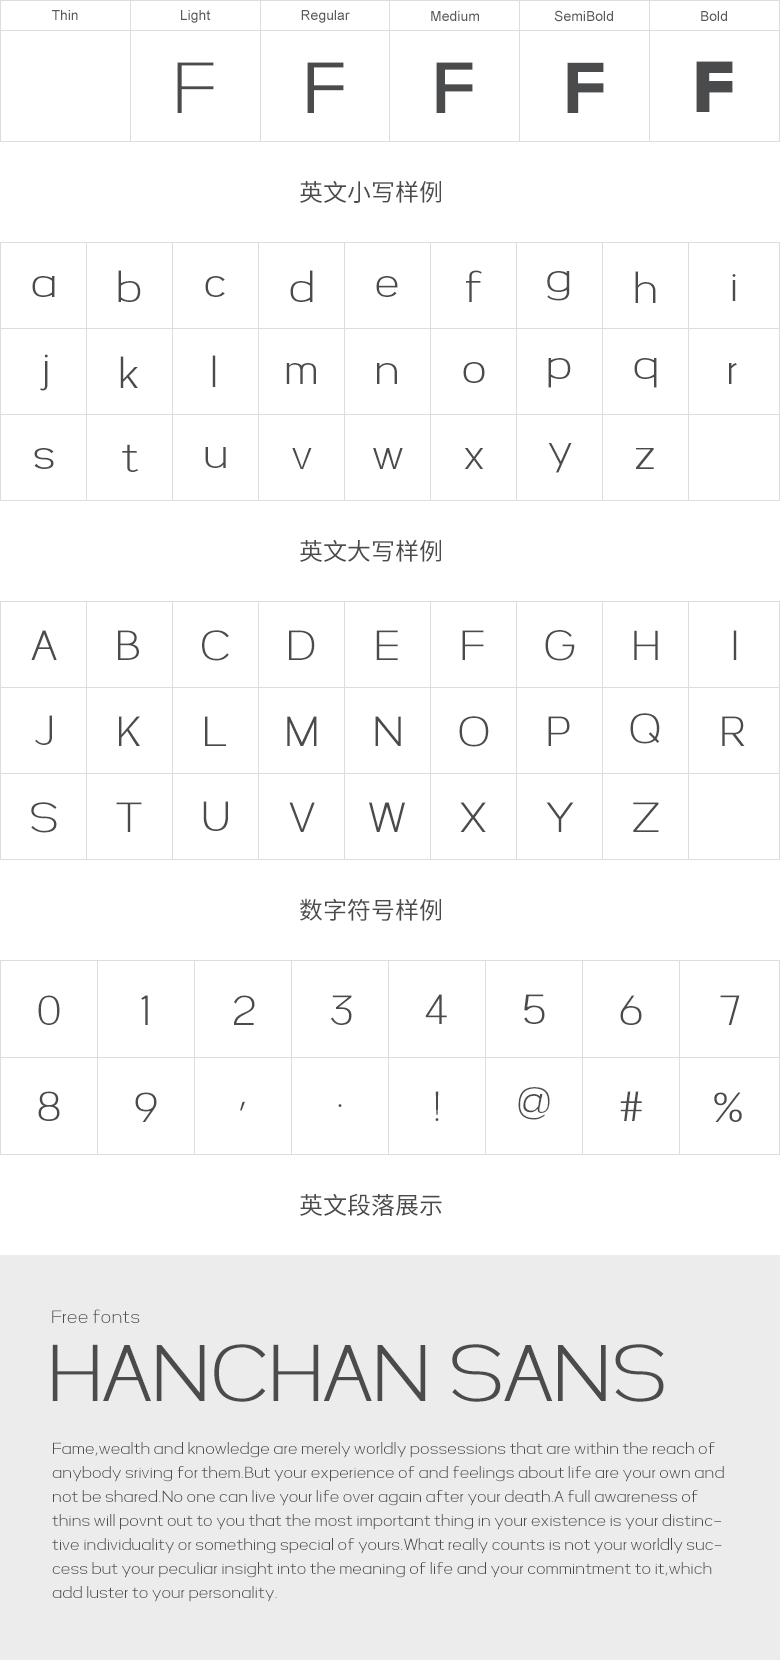 【Hanchan Sans】免费可商用字体下载